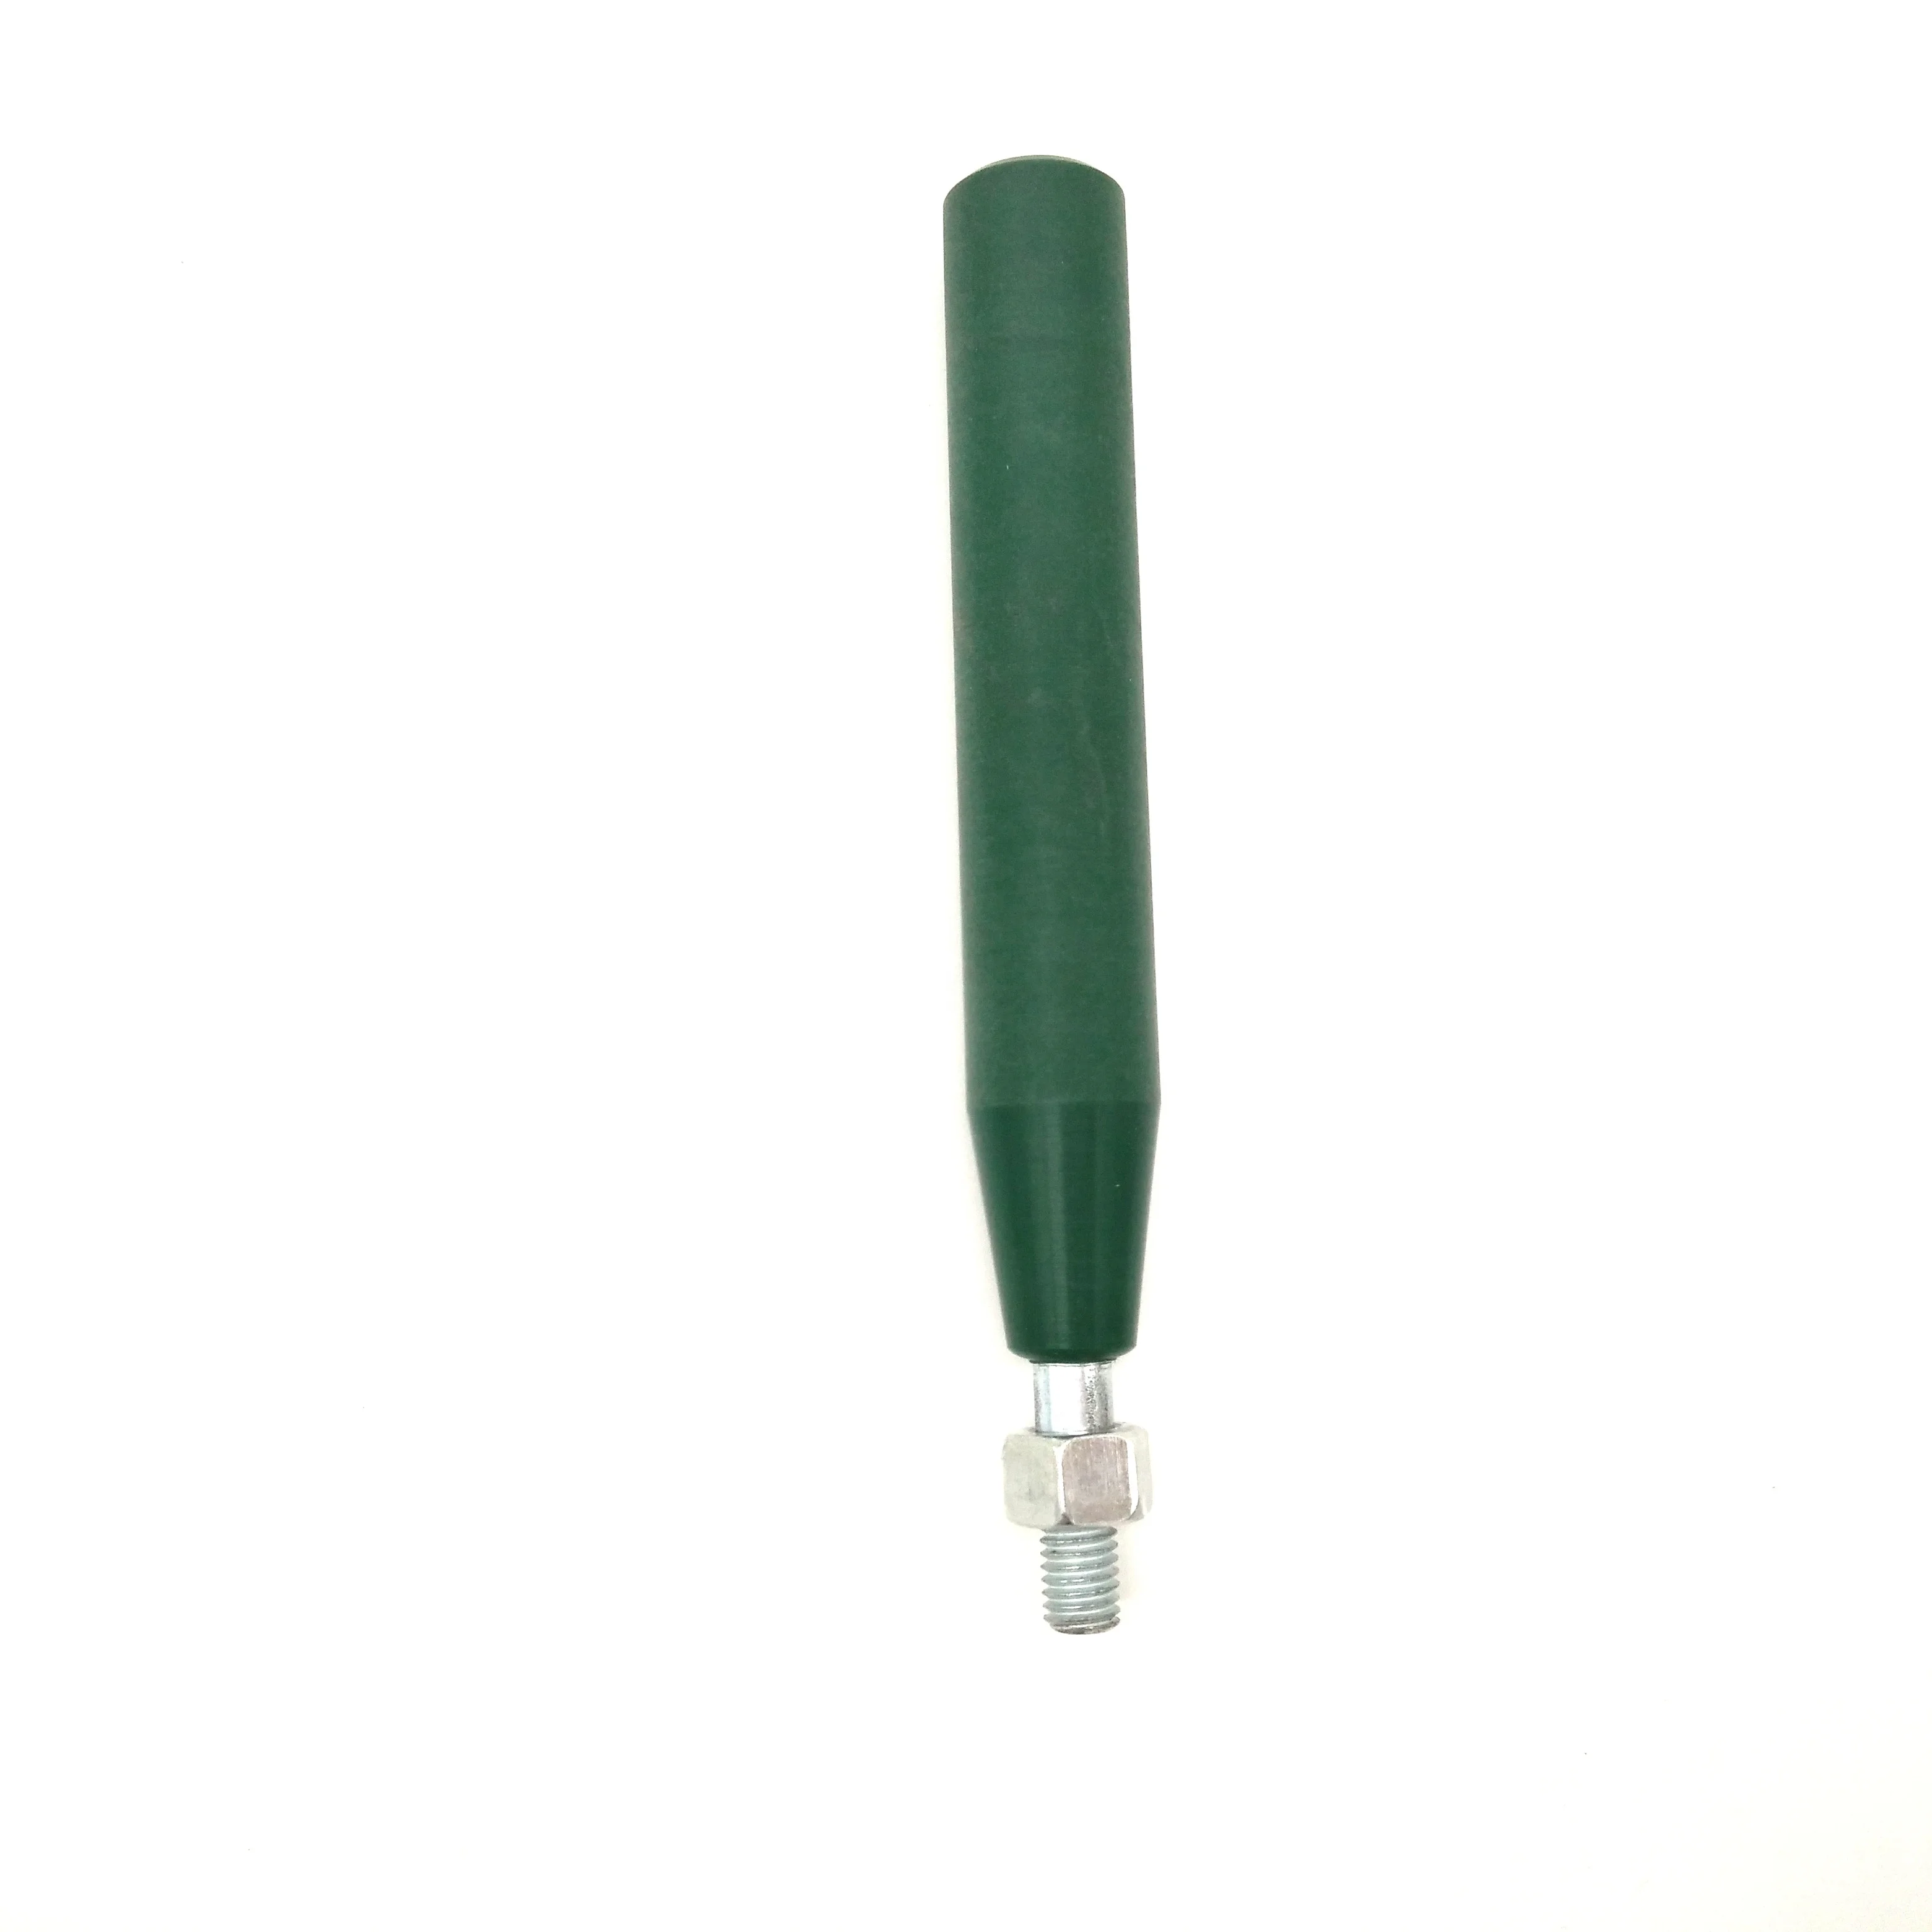 OEM custom-made high quality green plastic threaded handle stud screw